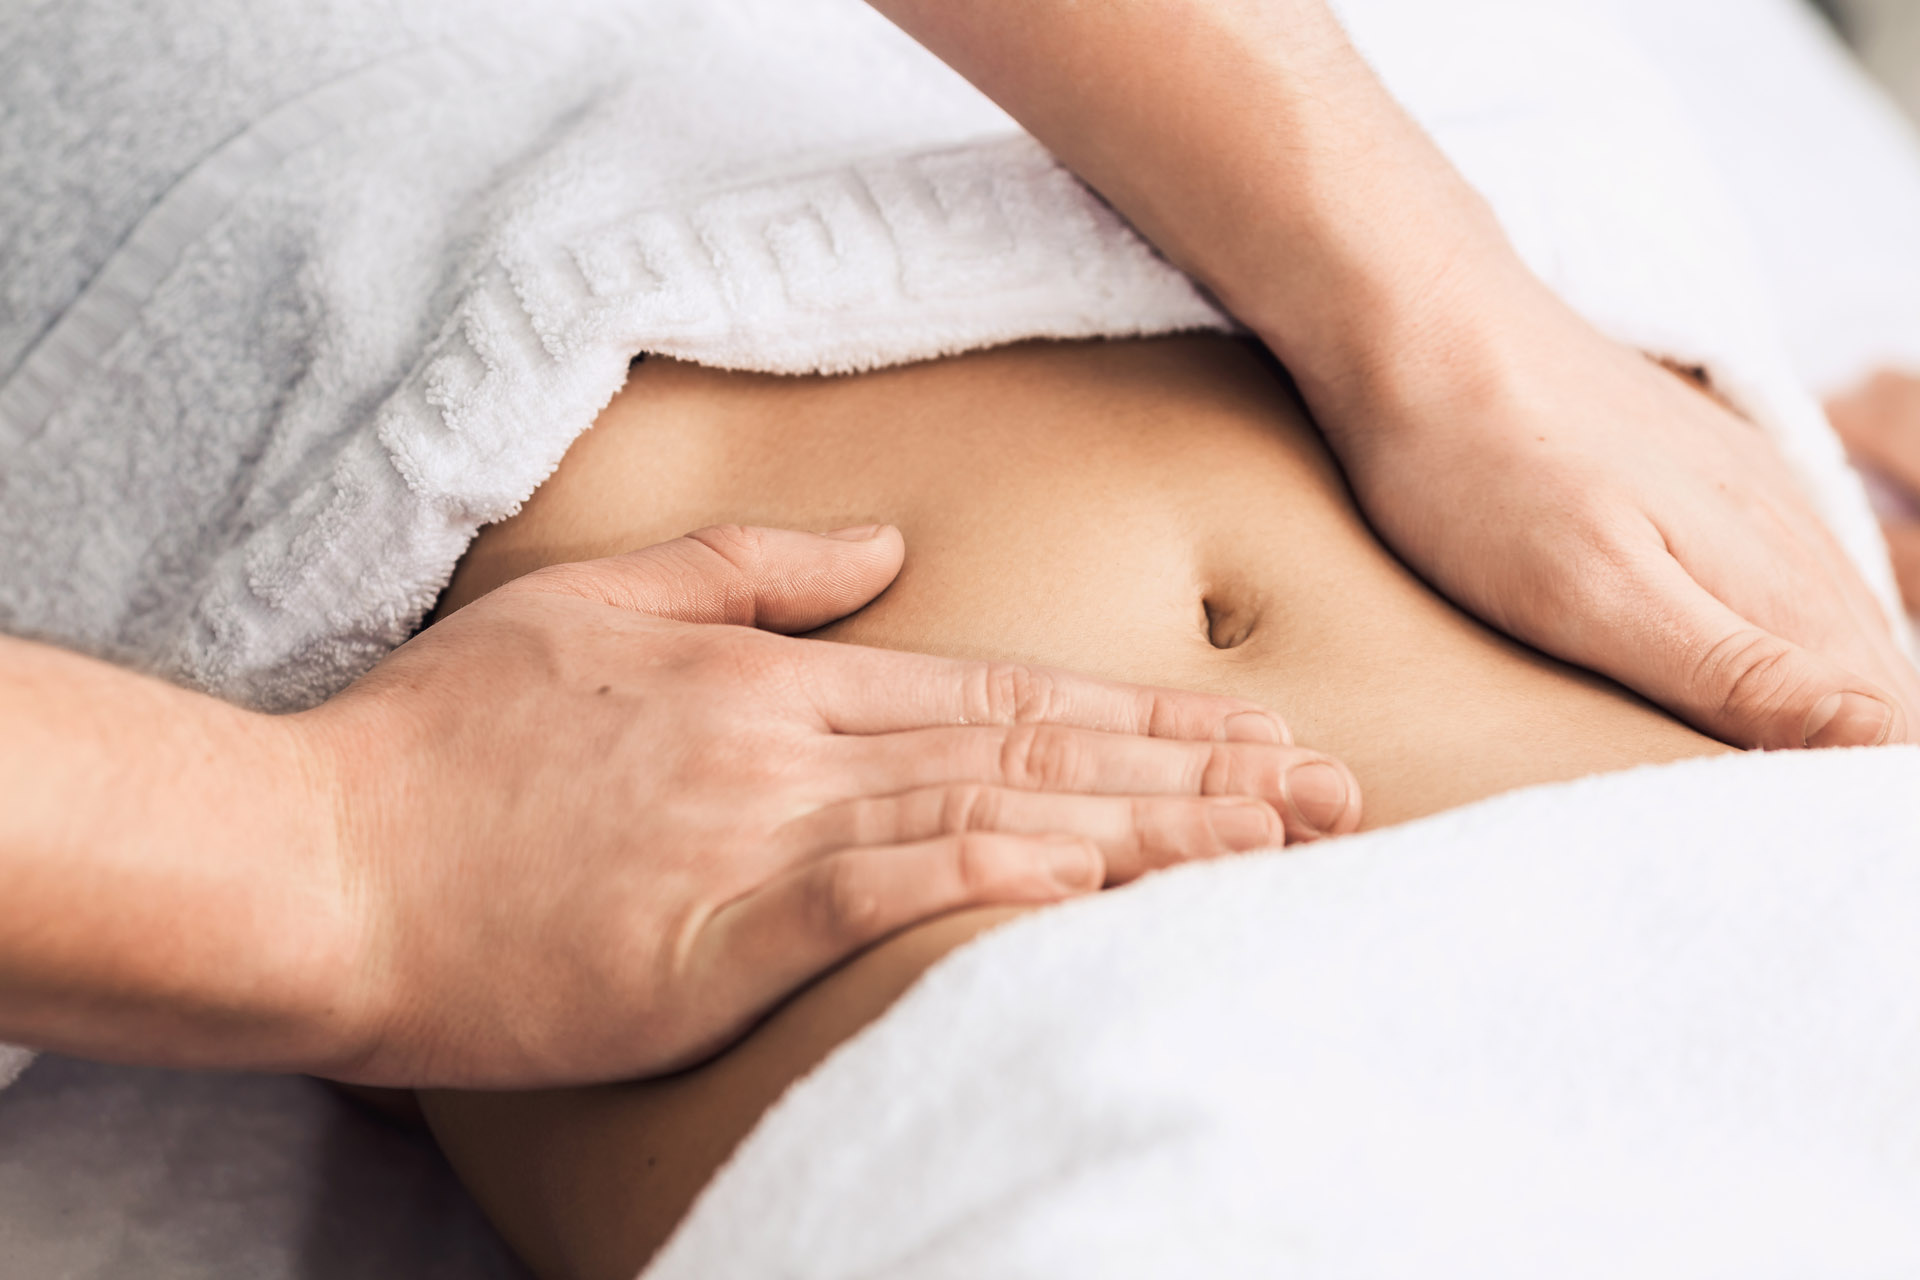 Abdominal Massage to Aid Fertility